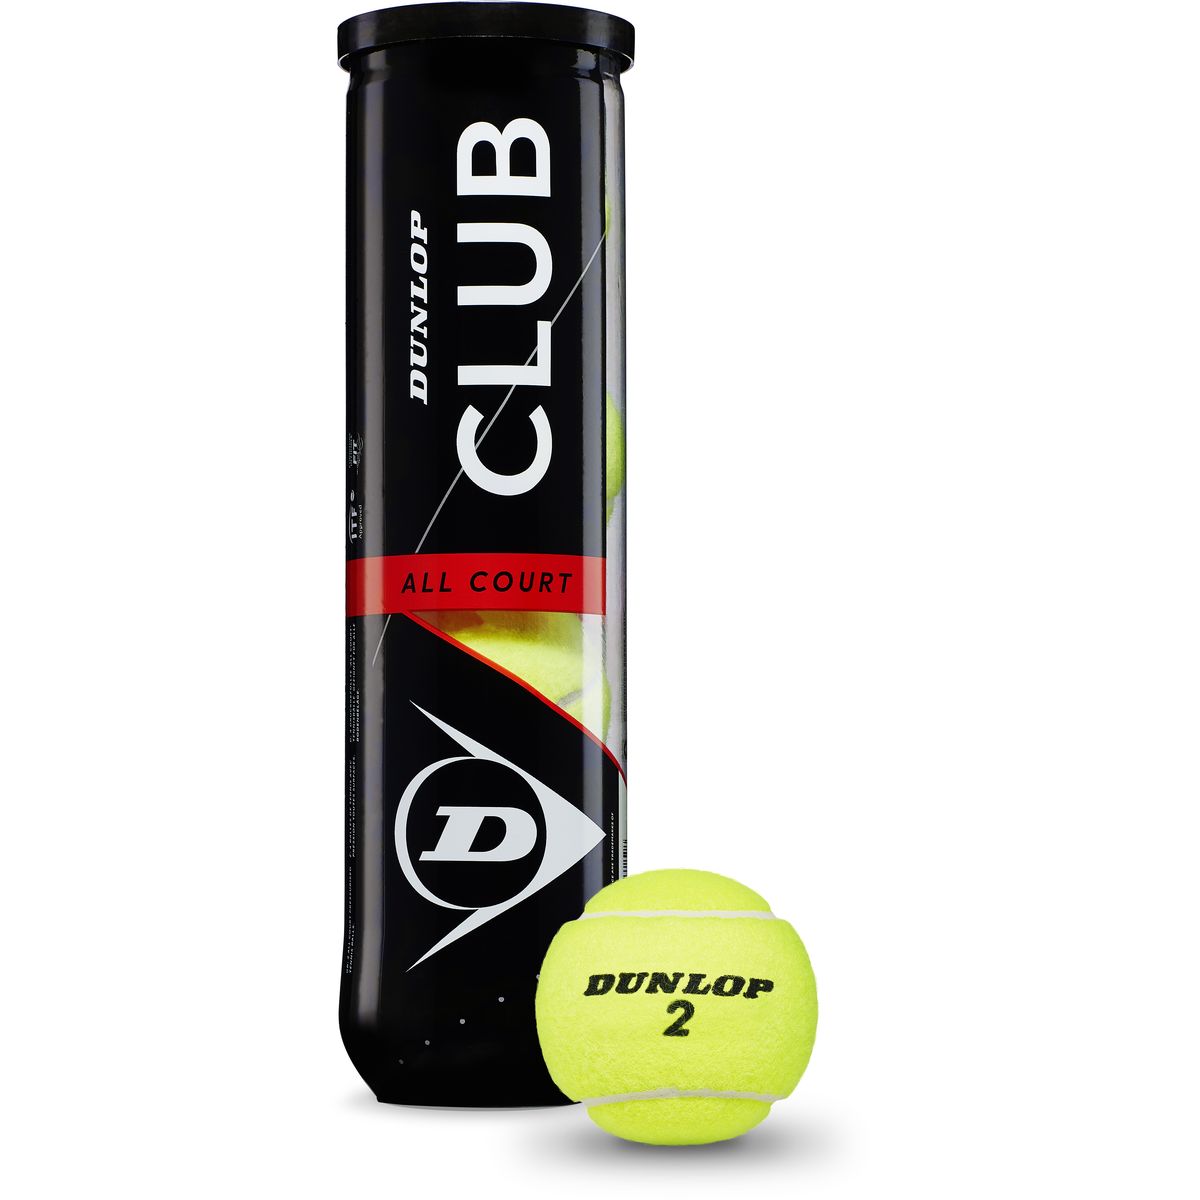 Dunlop Club Allcourt IS -4er Tennisbälle